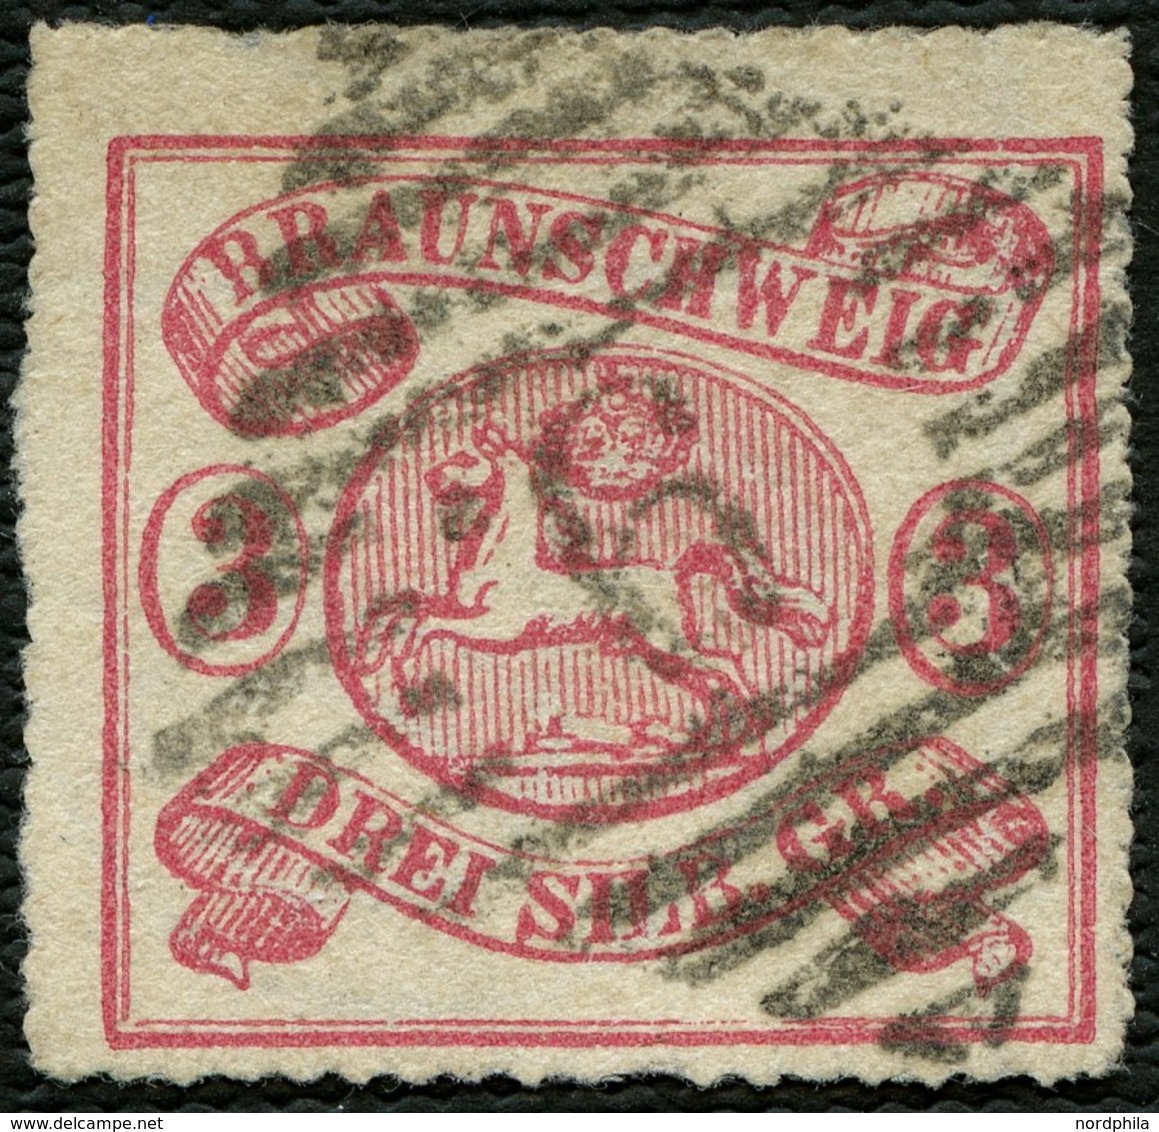 BRAUNSCHWEIG 16 O, 1864, 3 Sgr. Lilarot, Nummernstempel 9, Farbfrisches Kabinettstück, Fotoattest Lange, Mi. (650.-) - Brunswick